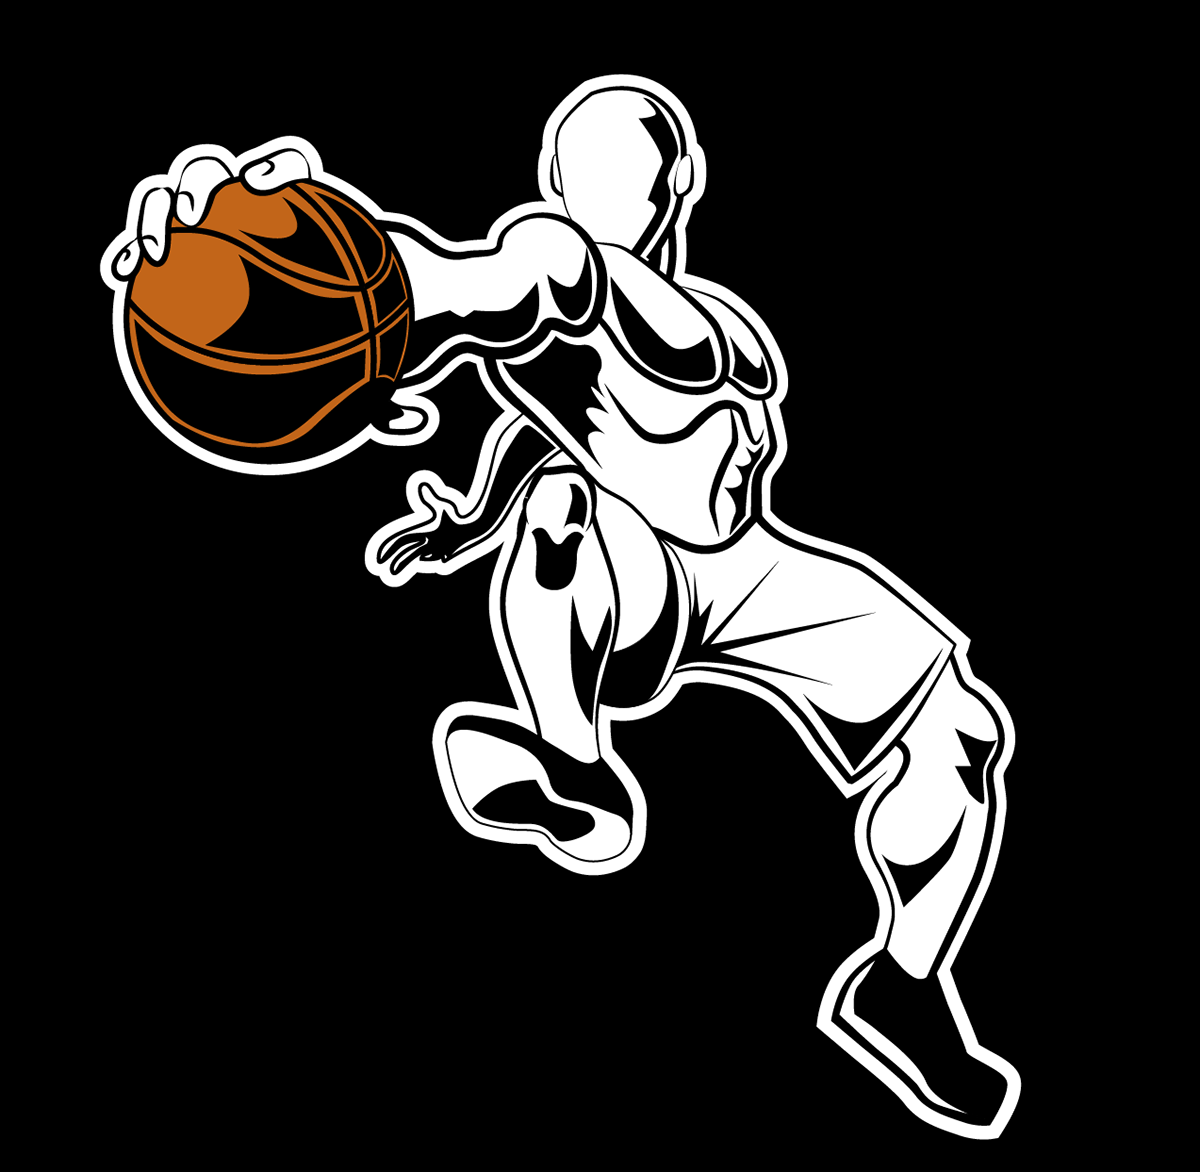 Mascot logo Character vector sports